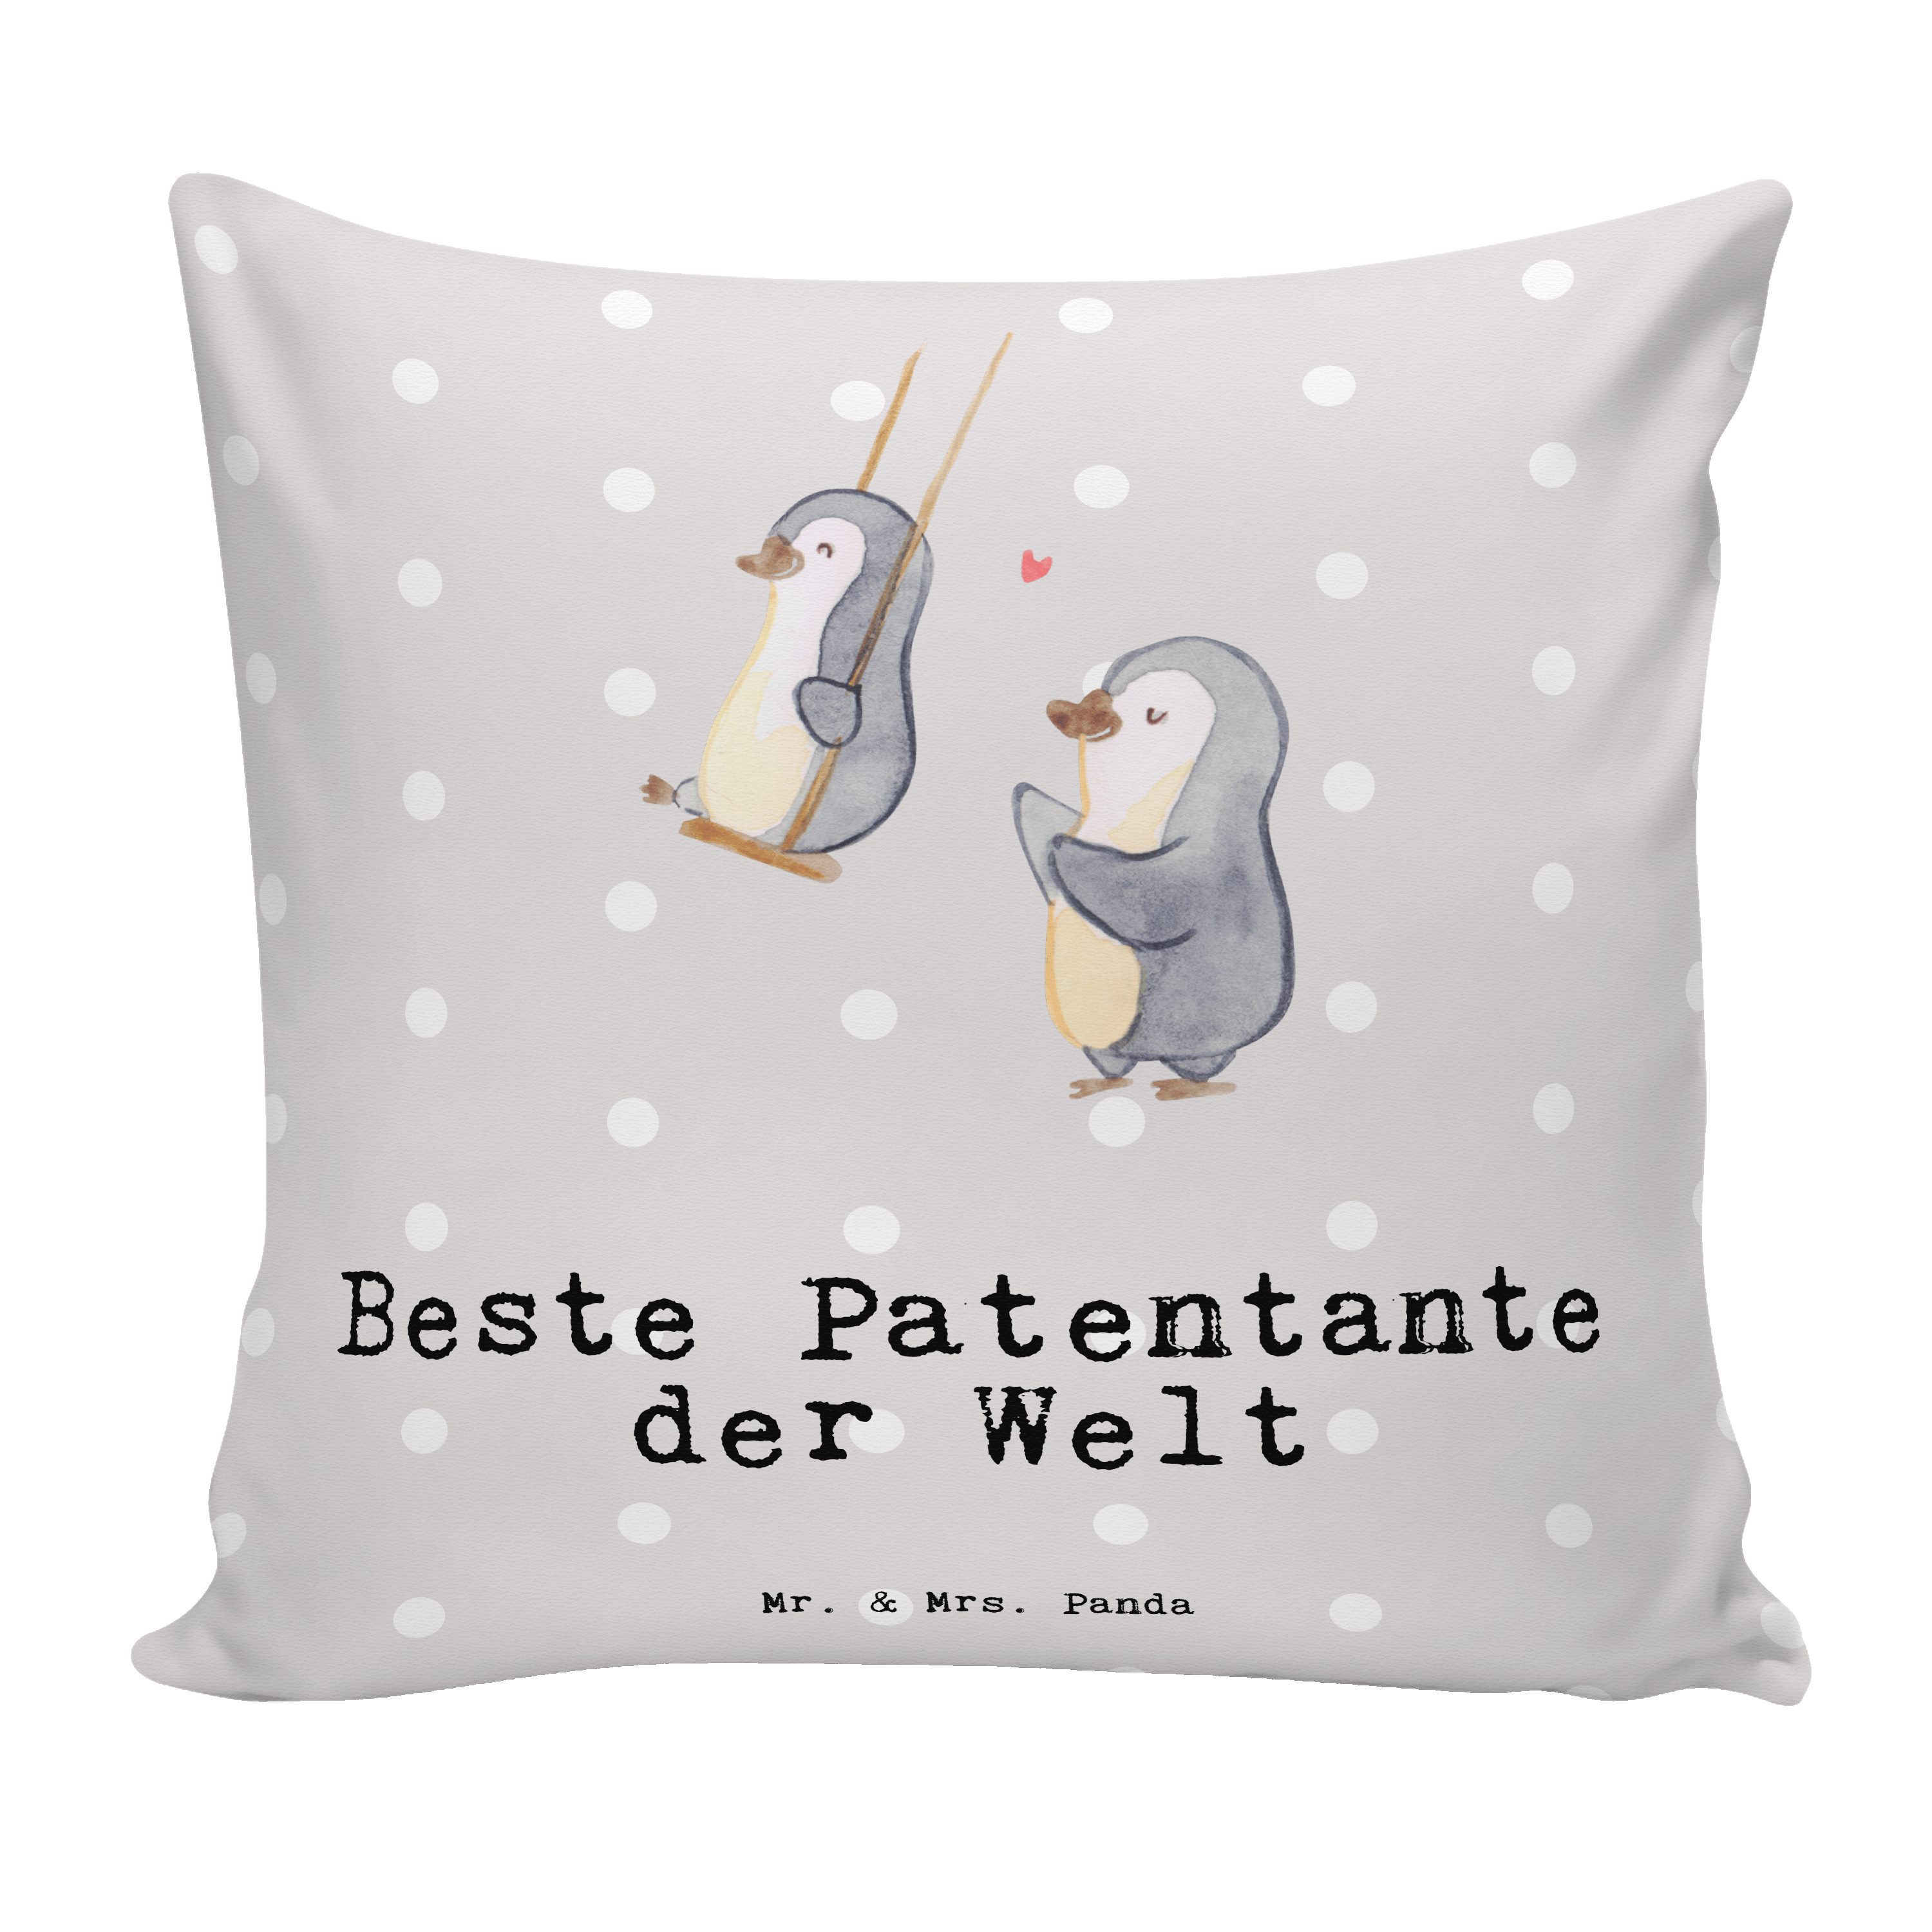 Mr. & Mrs. Panda Beste Dekokissen - Grau Sofakiss Pastell Welt - Patentante Geschenk, der Pinguin